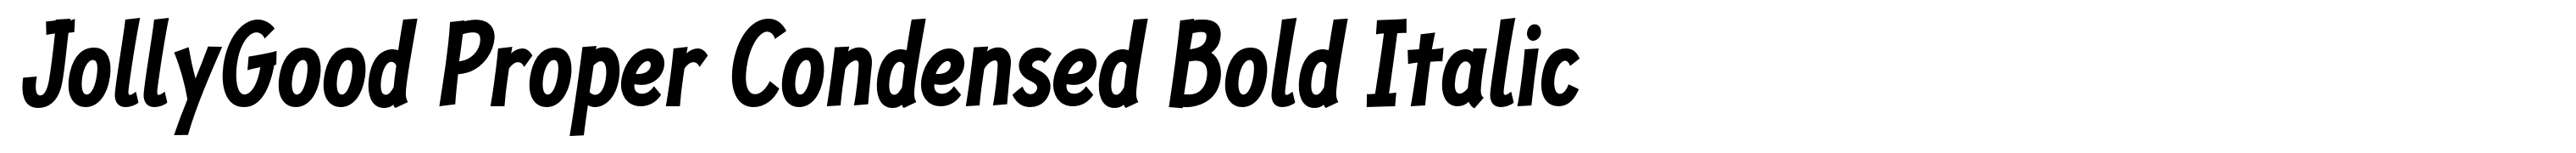 JollyGood Proper Condensed Bold Italic